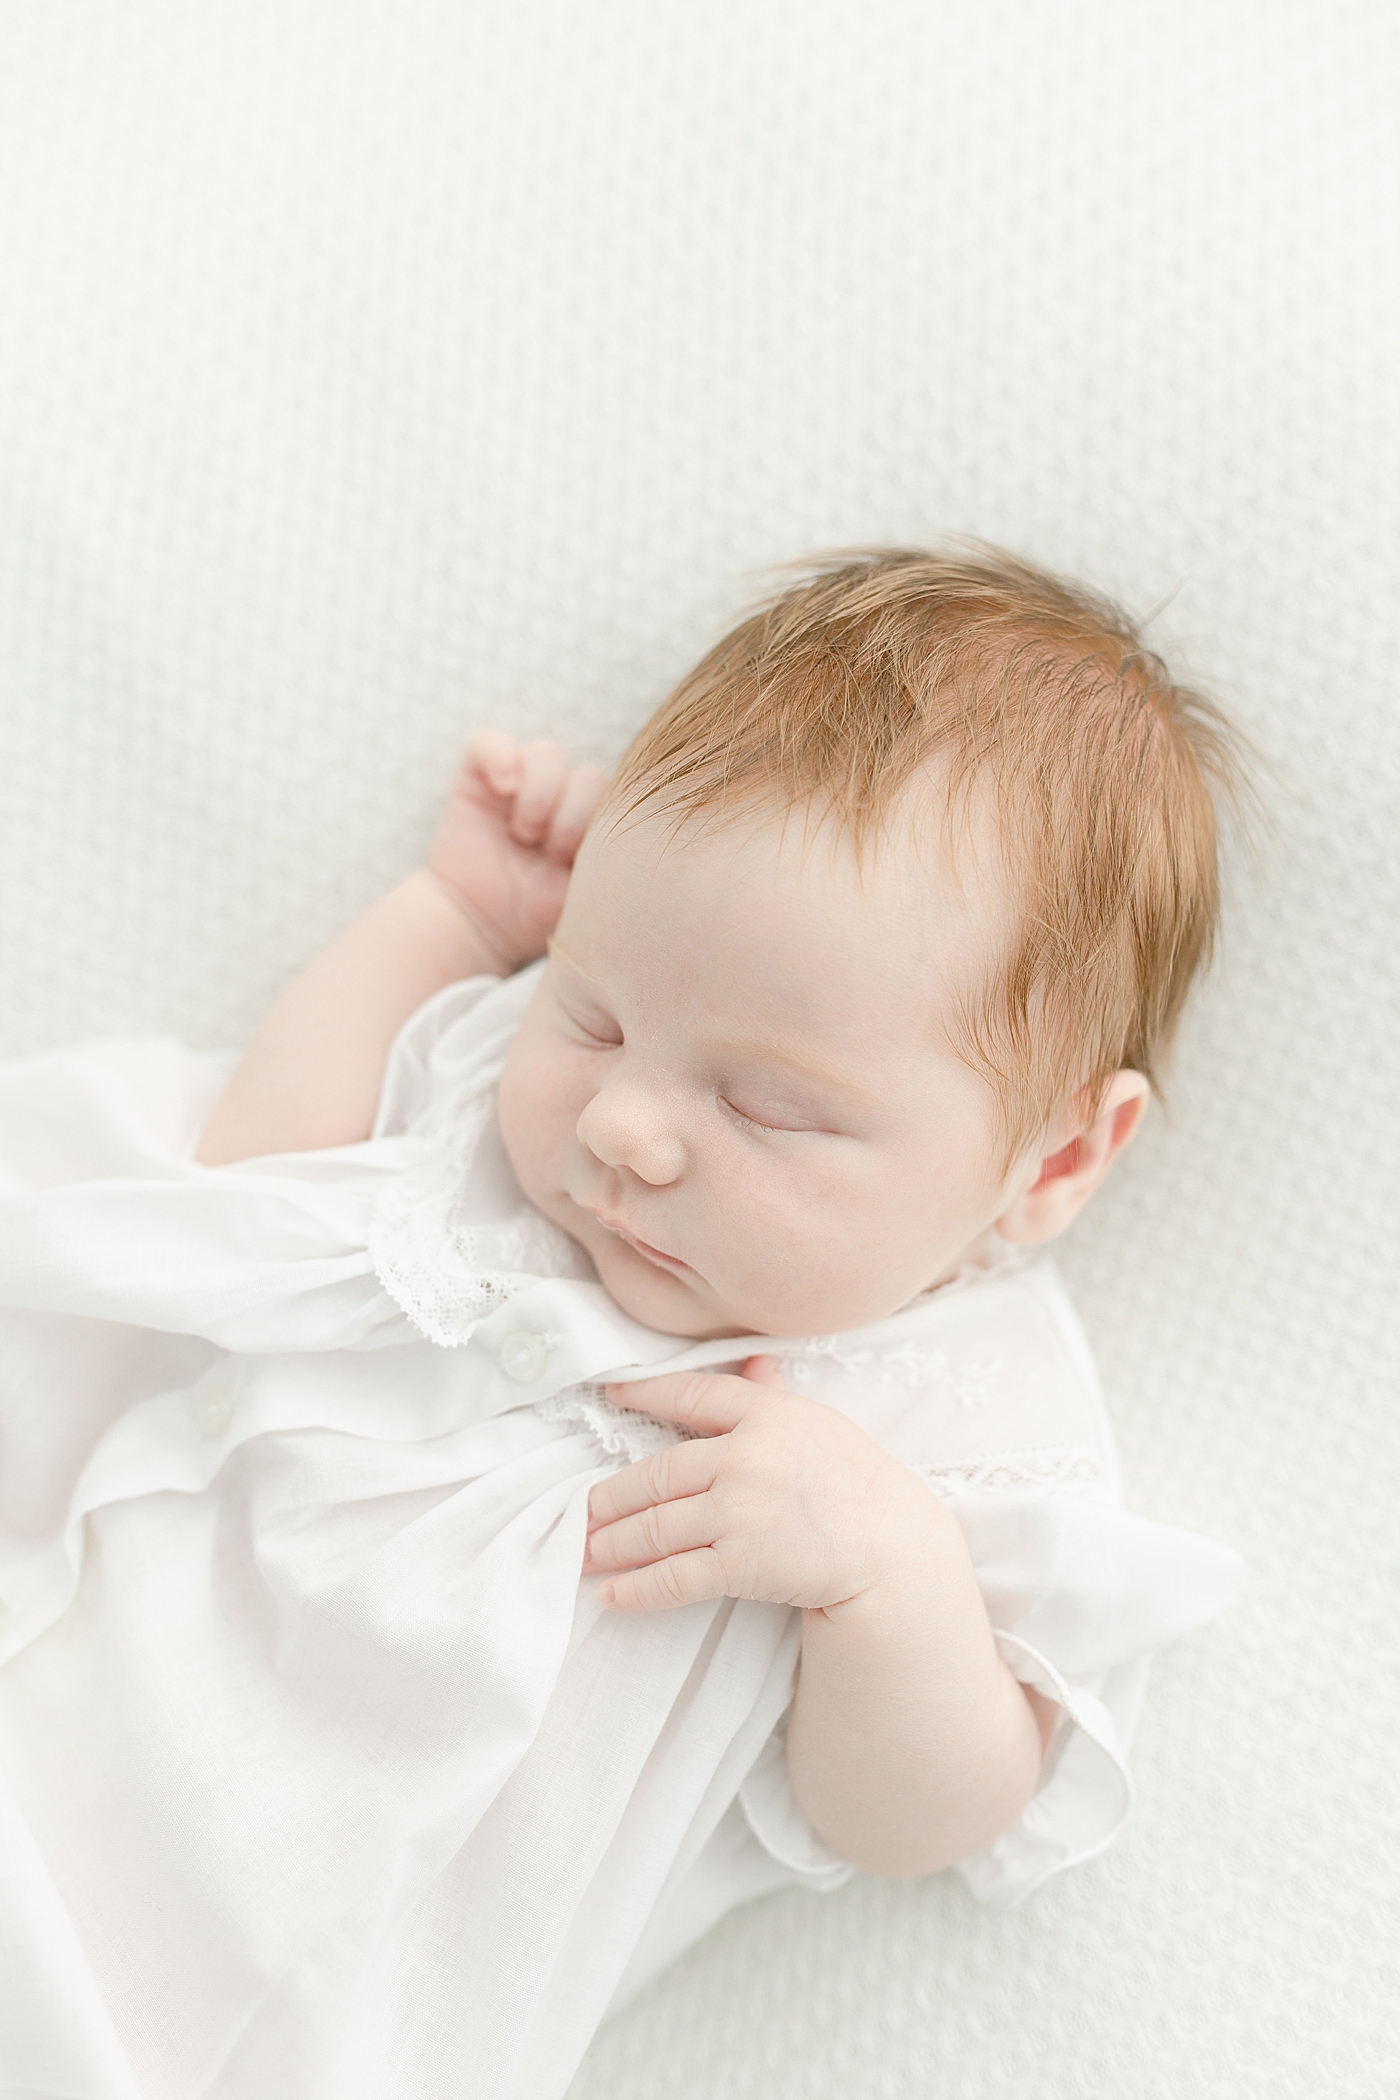 Sleeping newborn baby girl in white dress | Photo by Little Sunshine Photography